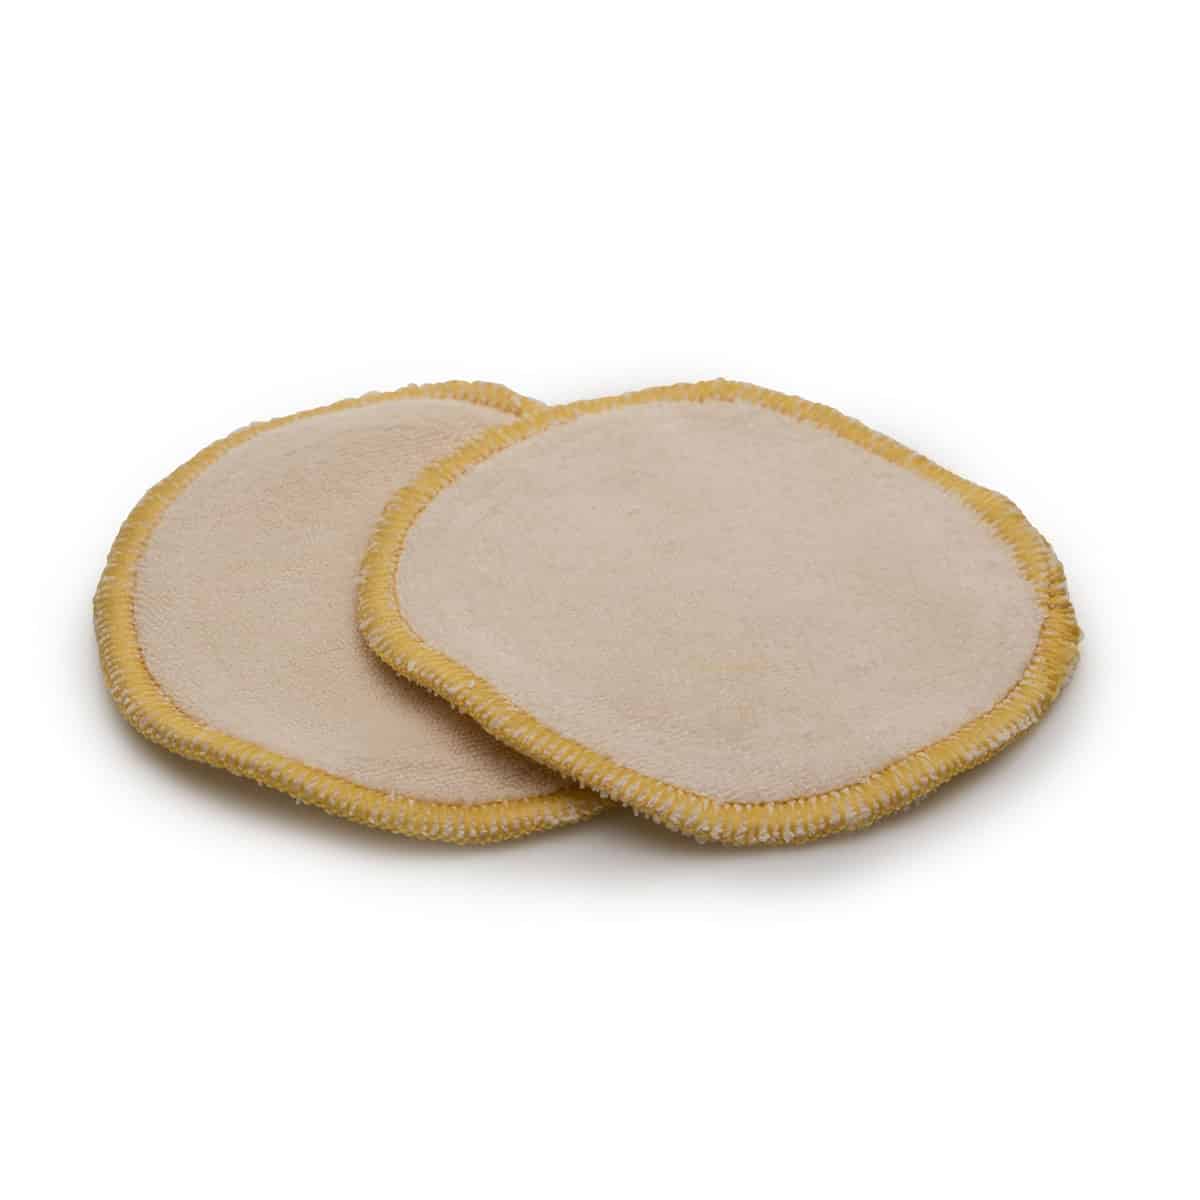 Washable make-up remover pads - Cotton micro-sponge